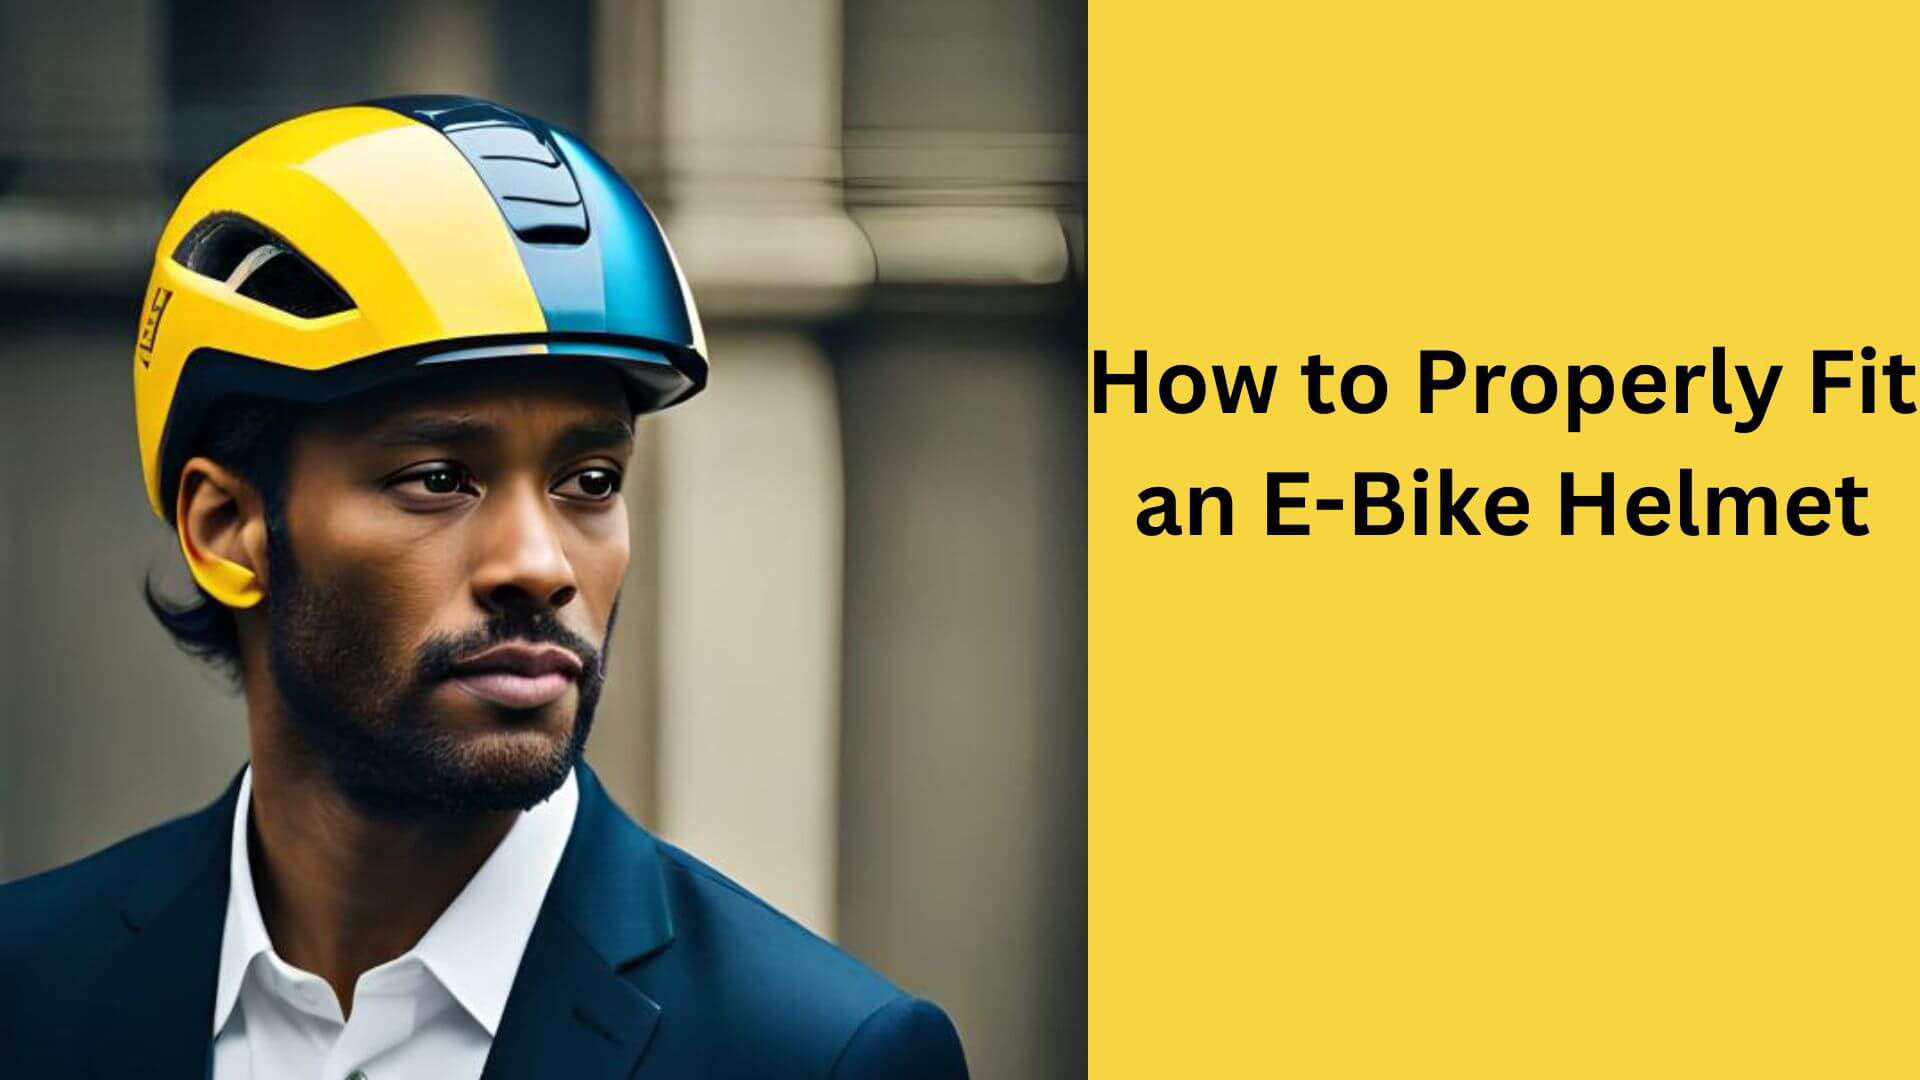 How to Properly Fit an E-Bike Helmet